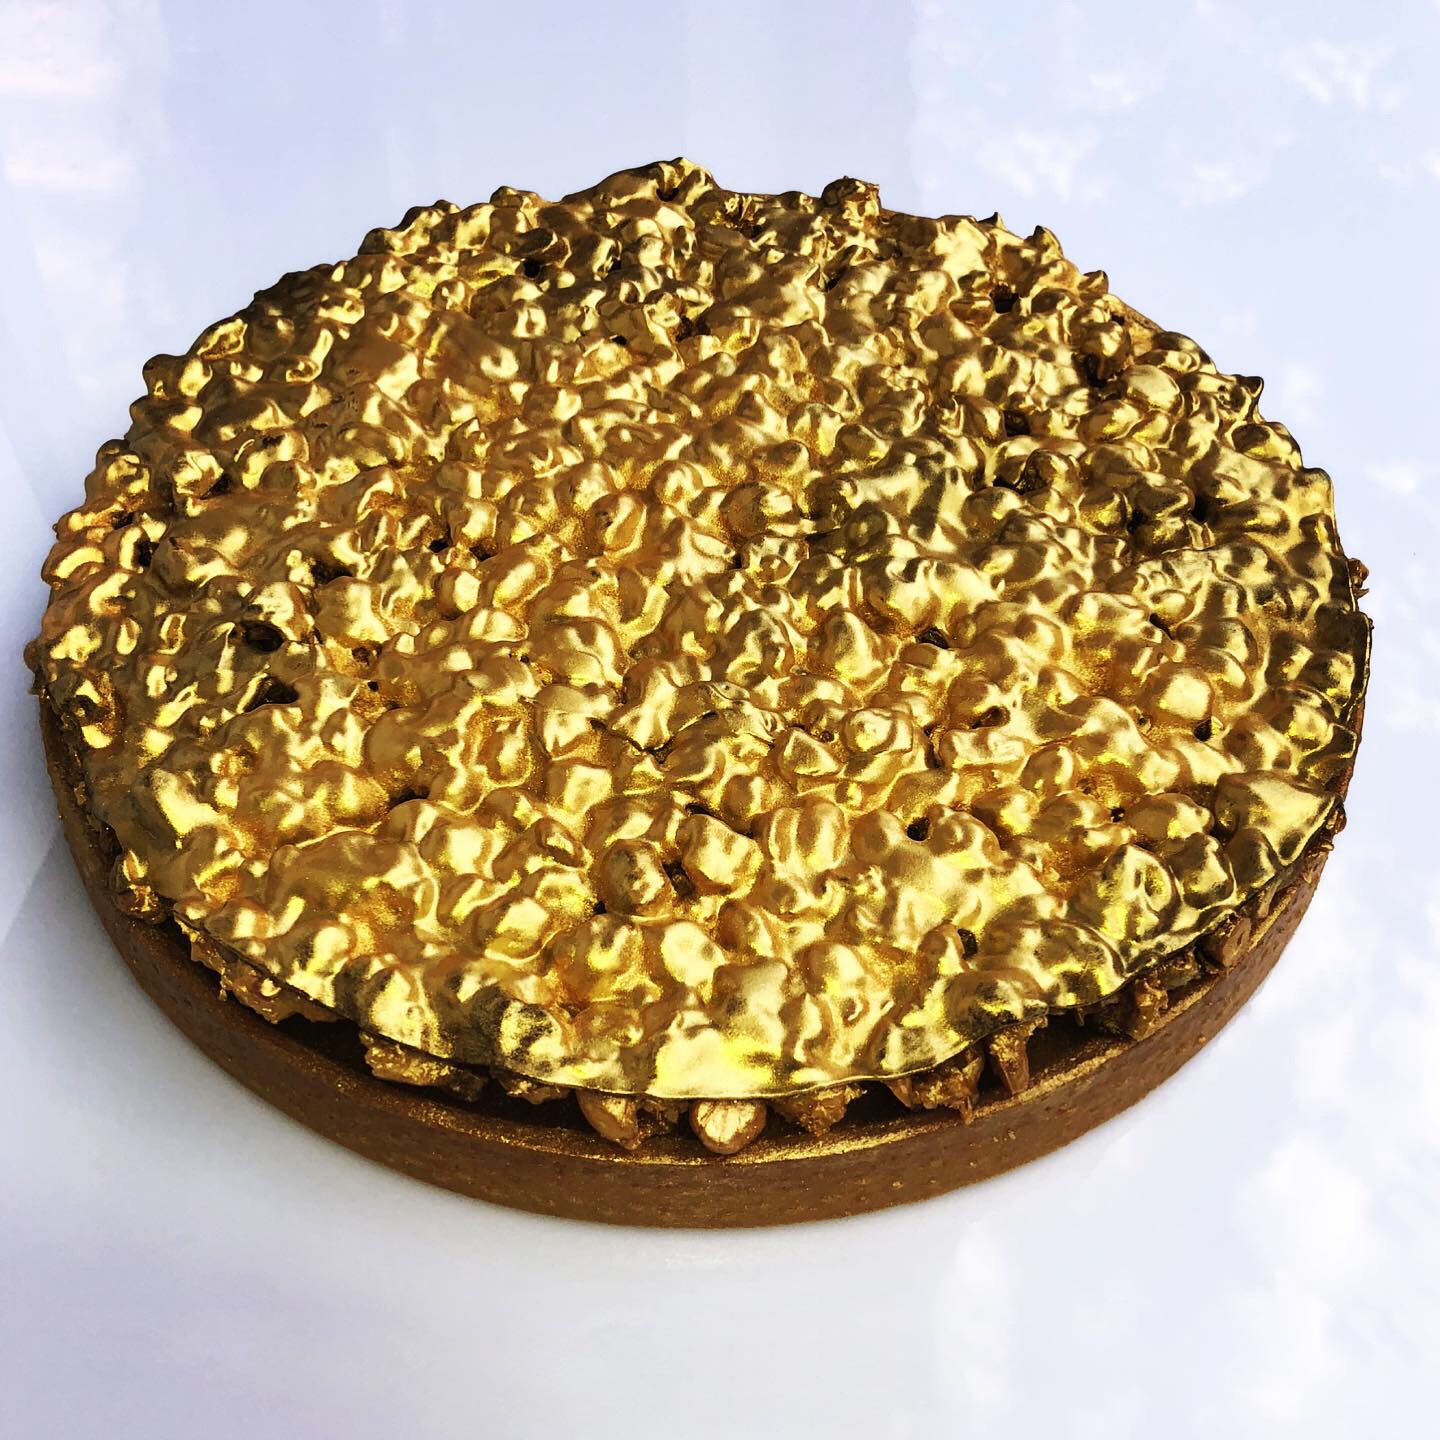 Recette de la tarte chocolat caramel cacahuète (façon snickers)